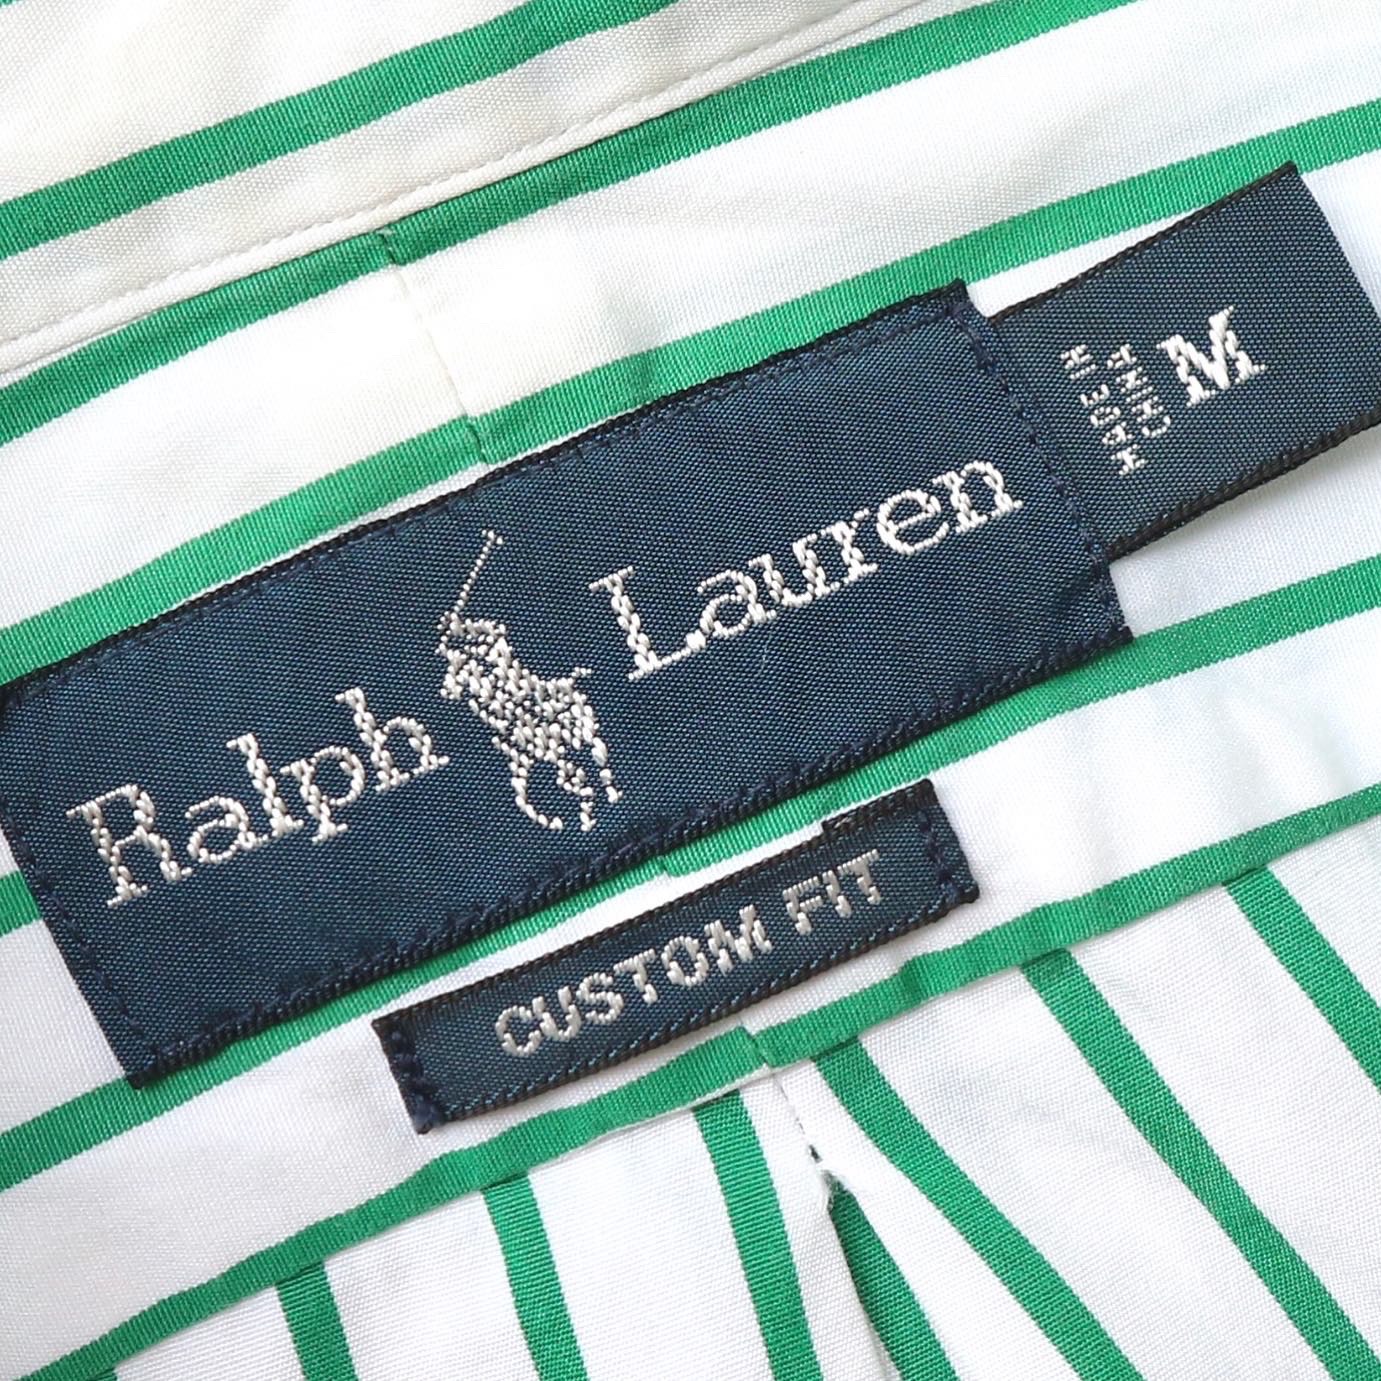 Polo by Ralph Lauren Shirt Size M